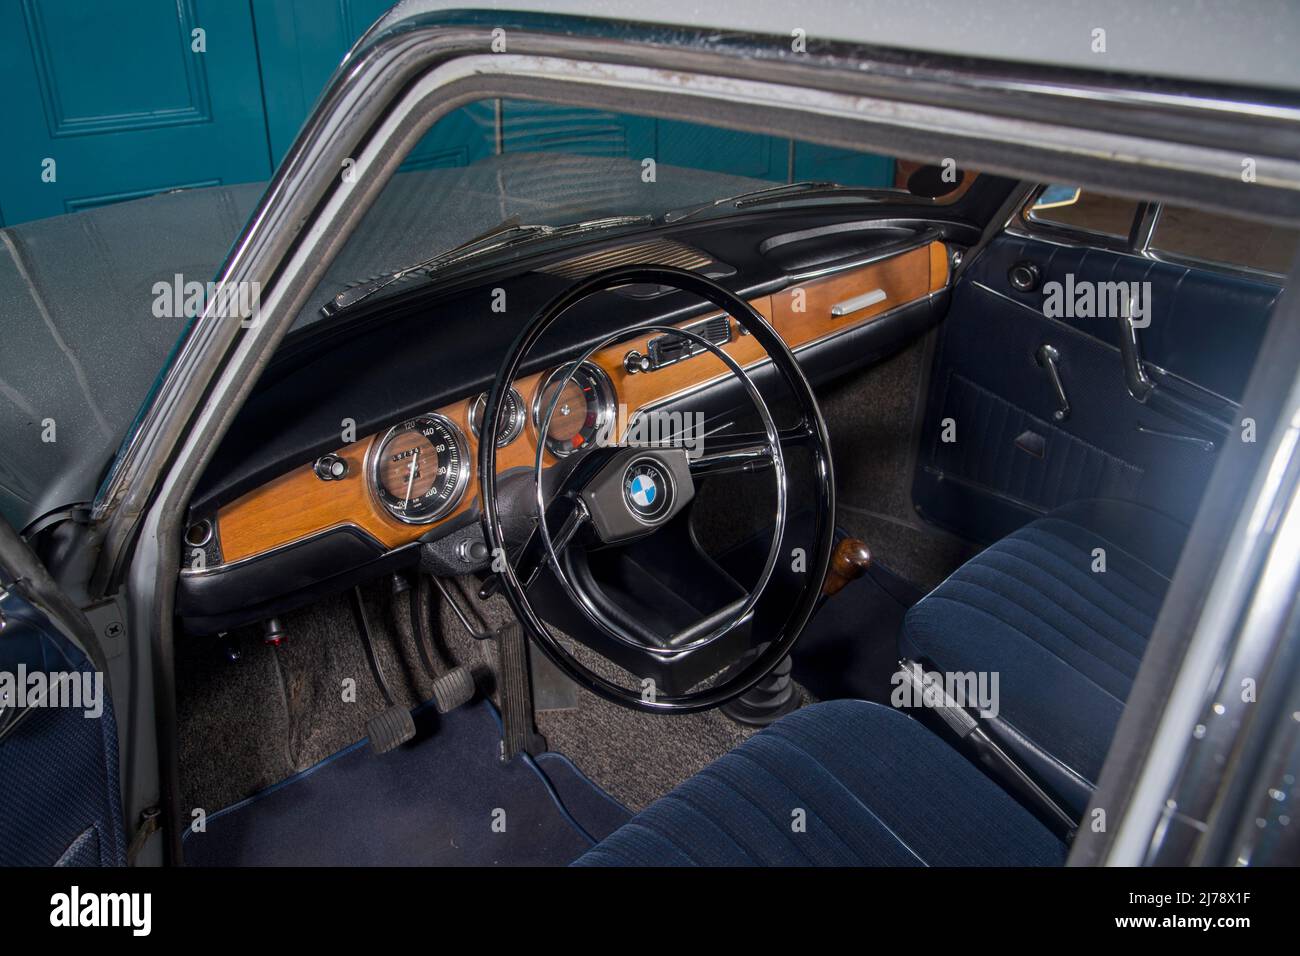 1967 BMW 2000 classic German saloon car Stock Photo